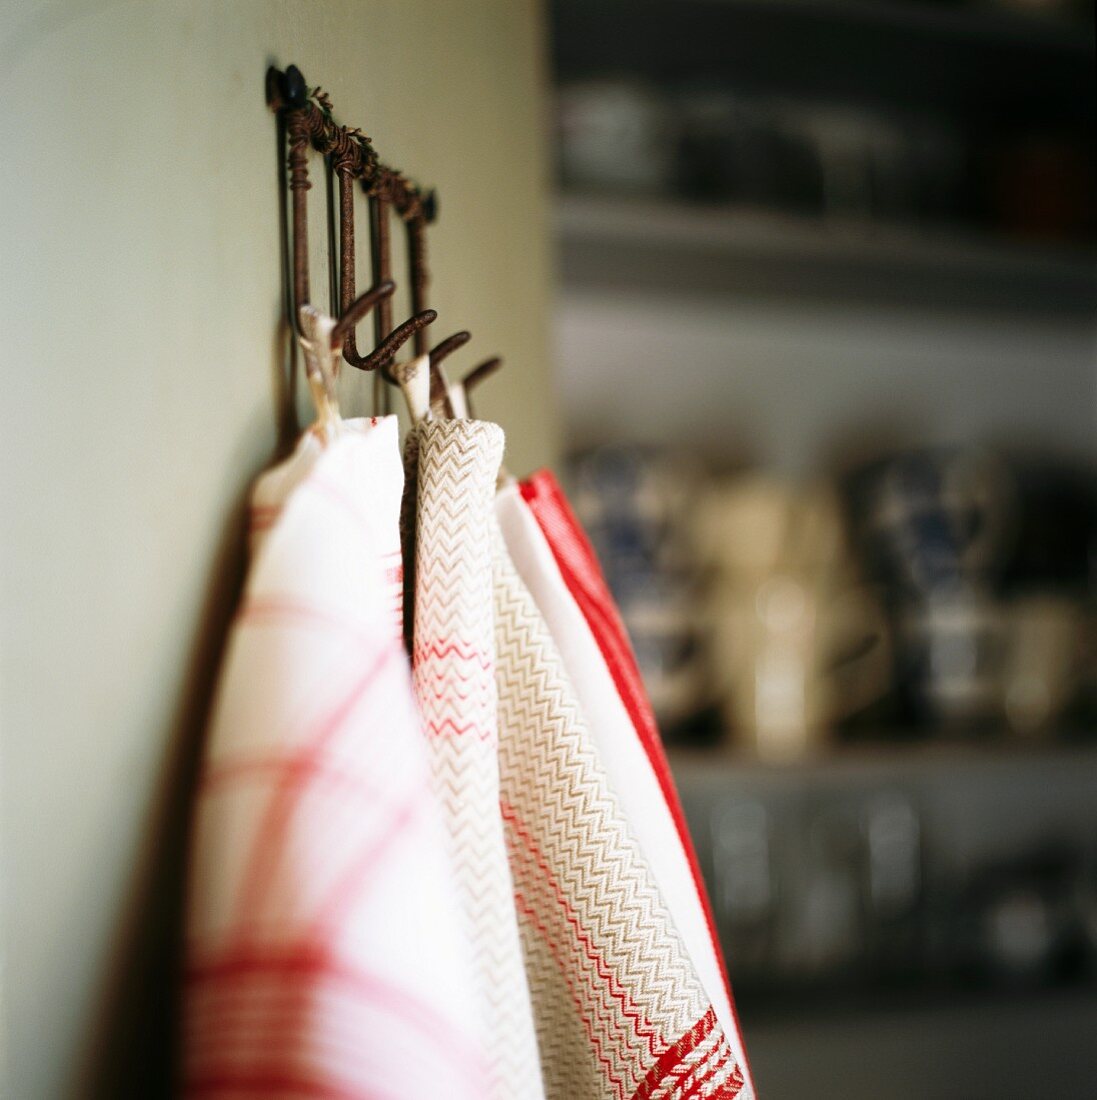 Tea towels hanging on pegs